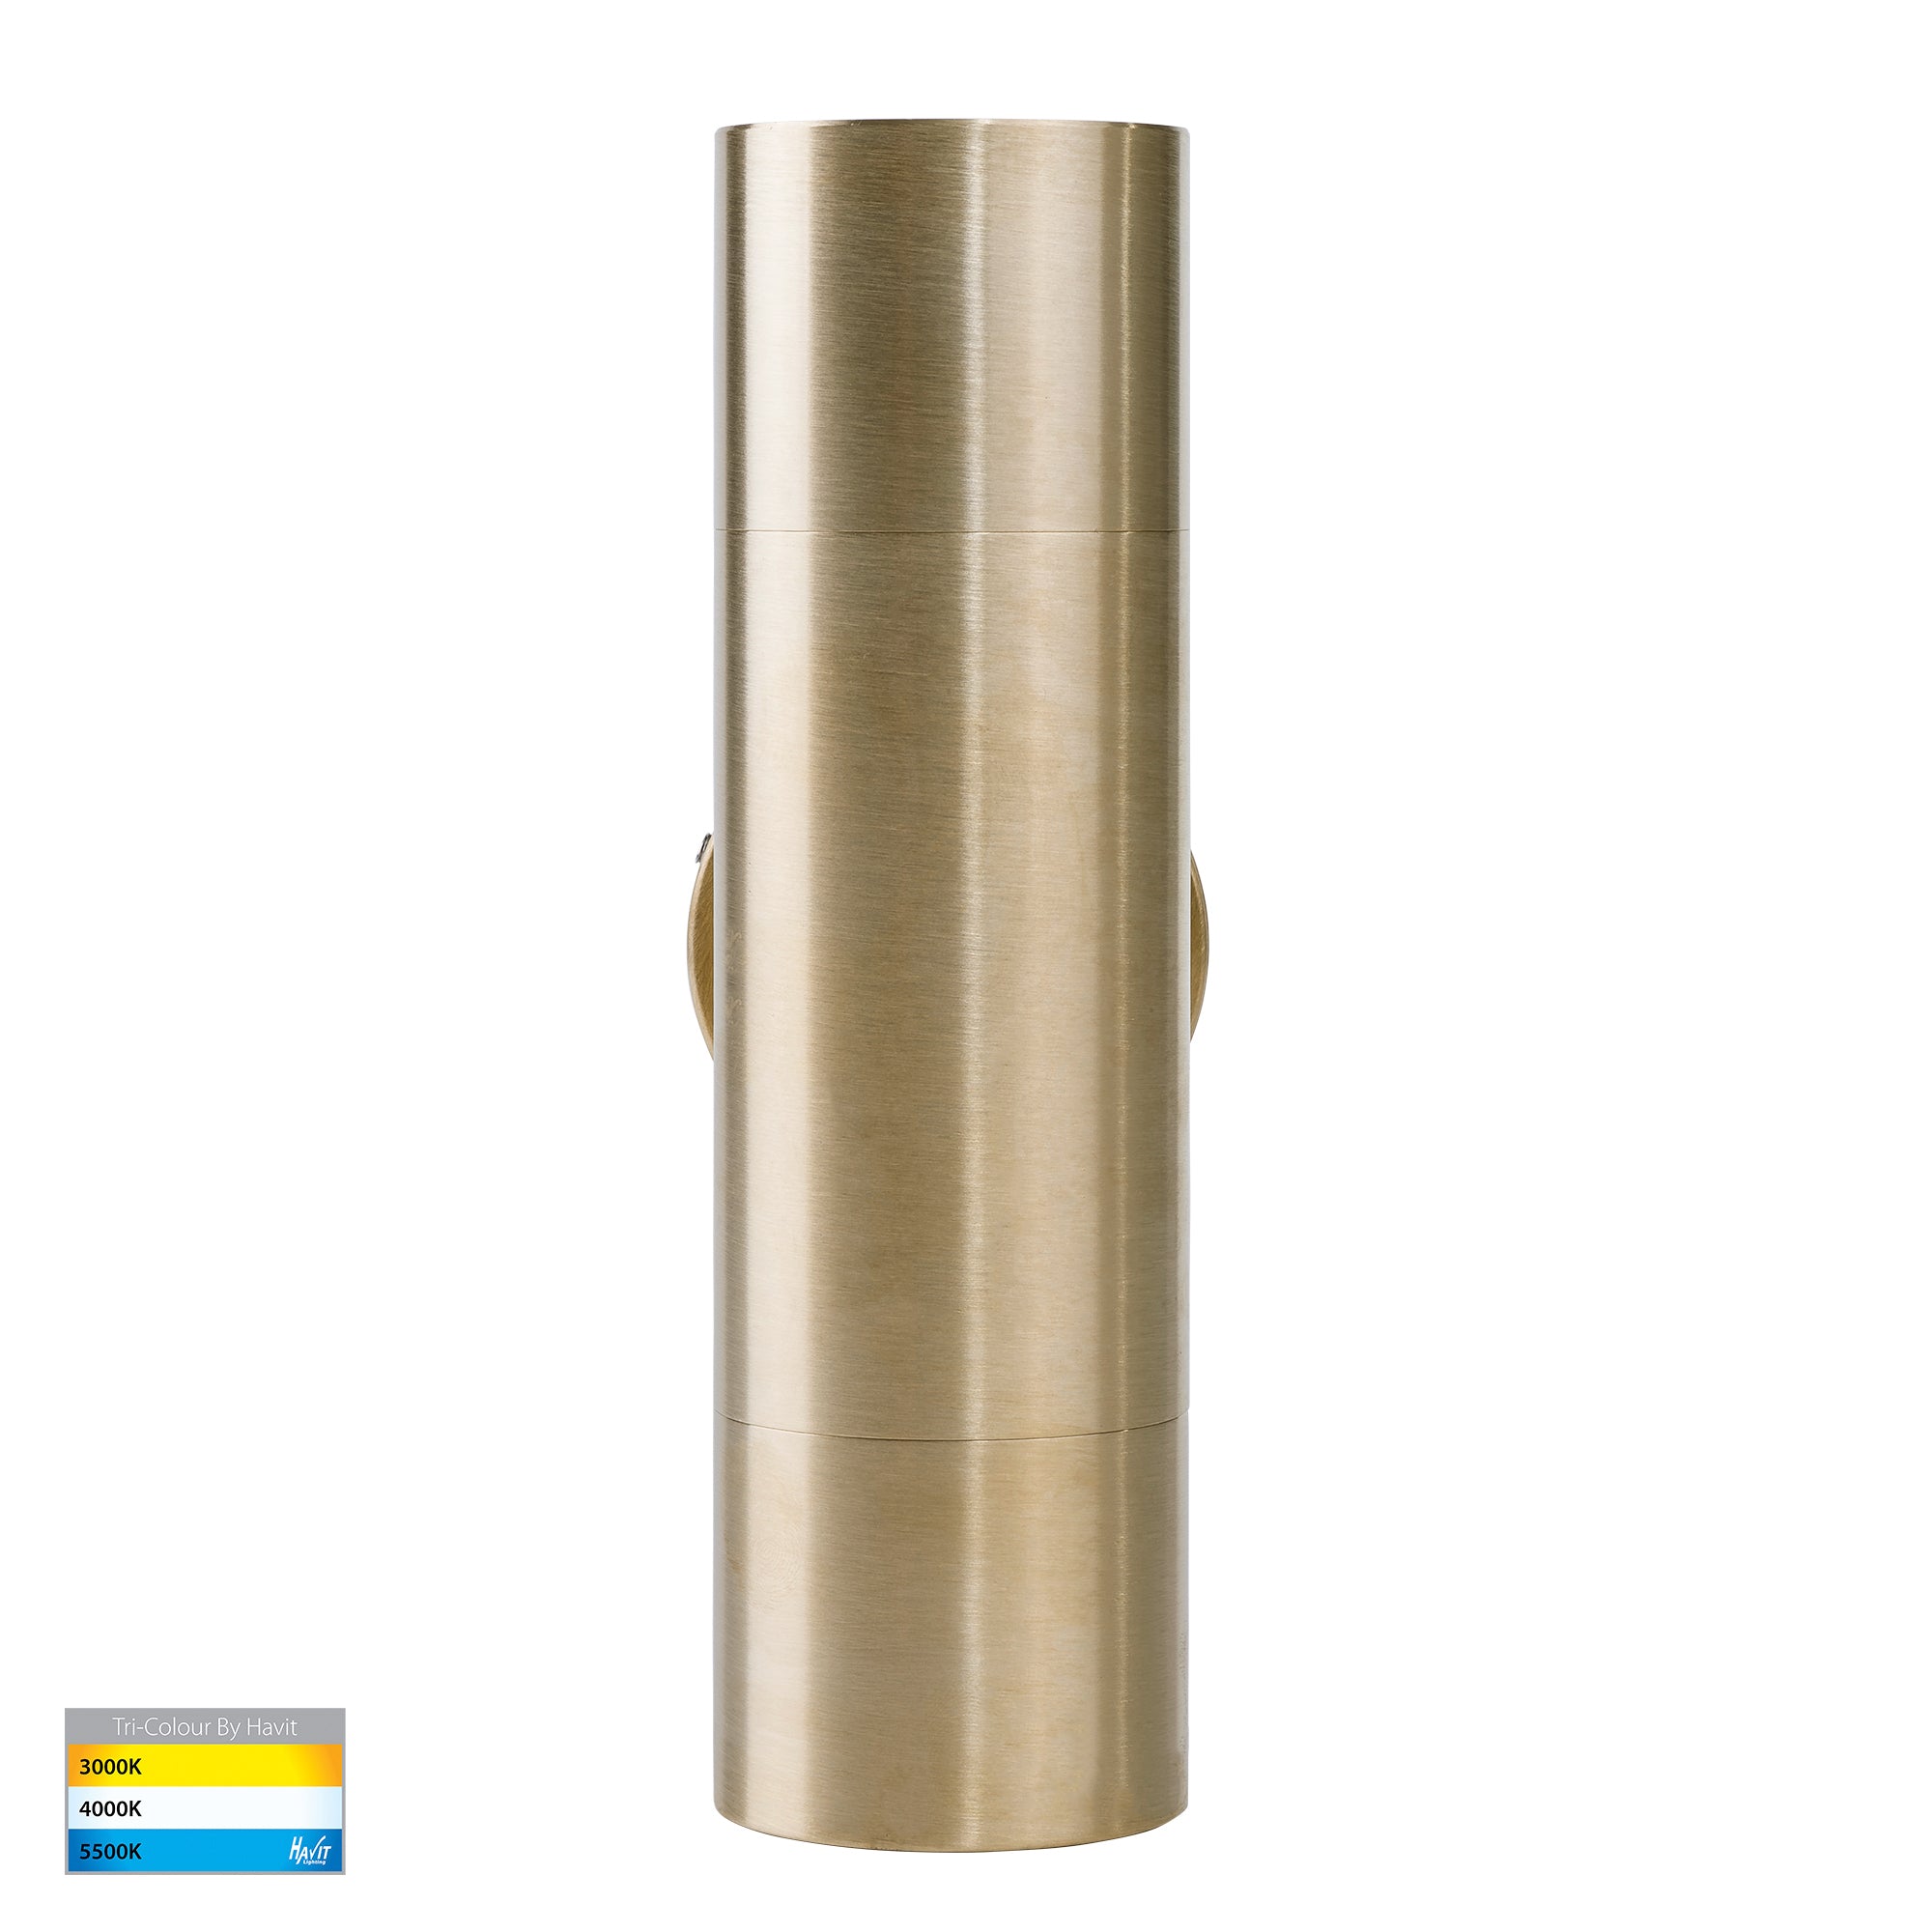 HV1055T-HV1057T - Tivah Solid Brass TRI Colour Up & Down Wall Pillar Lights